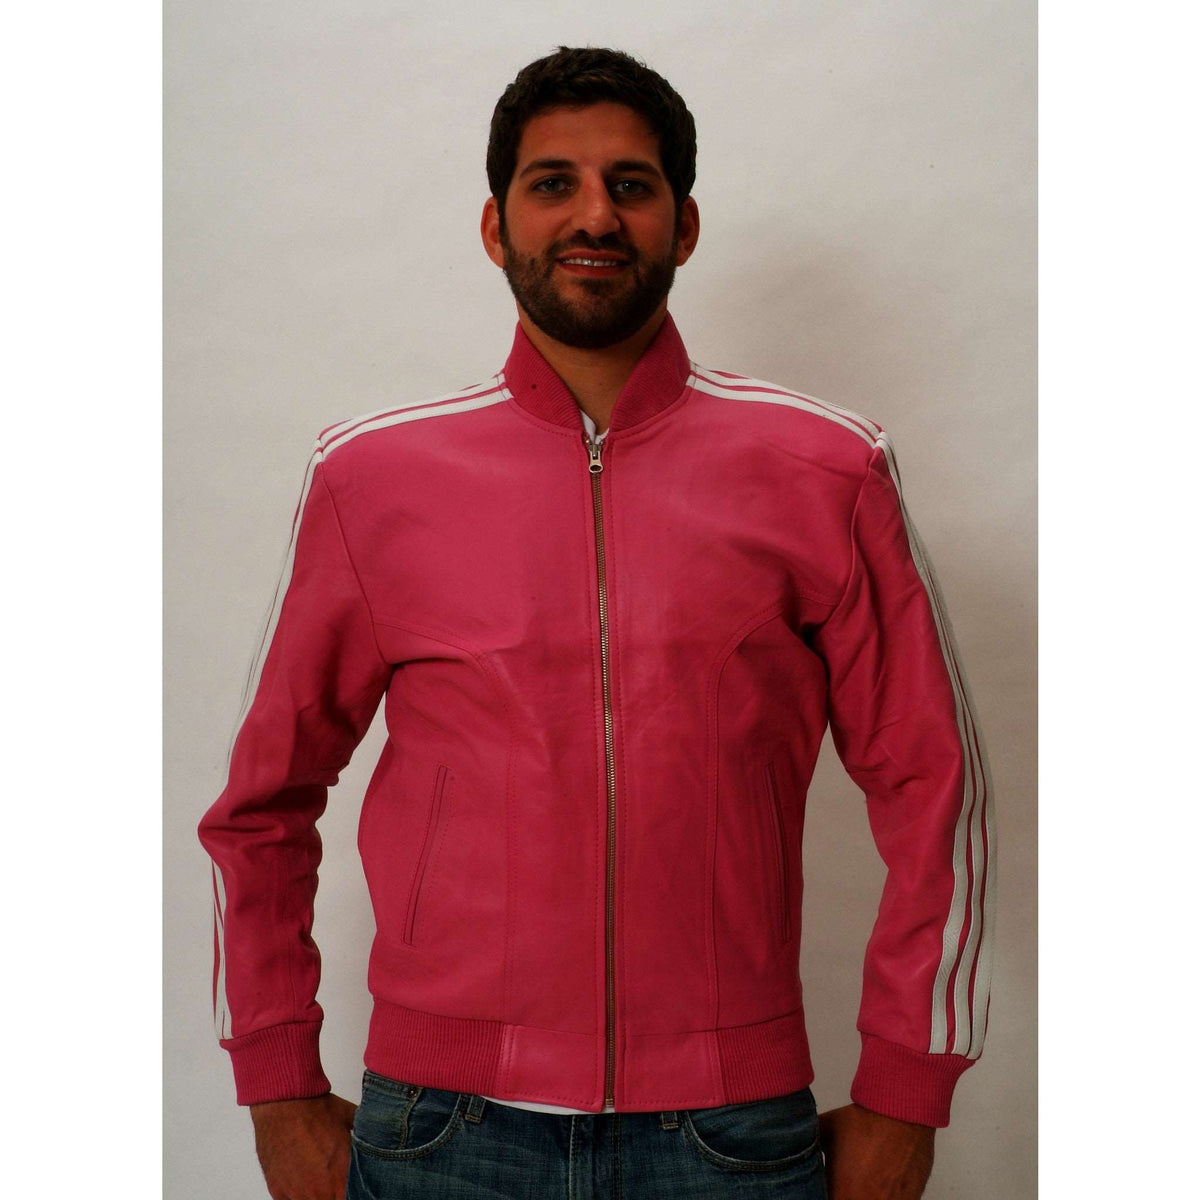 Mens pink leather track jacket front